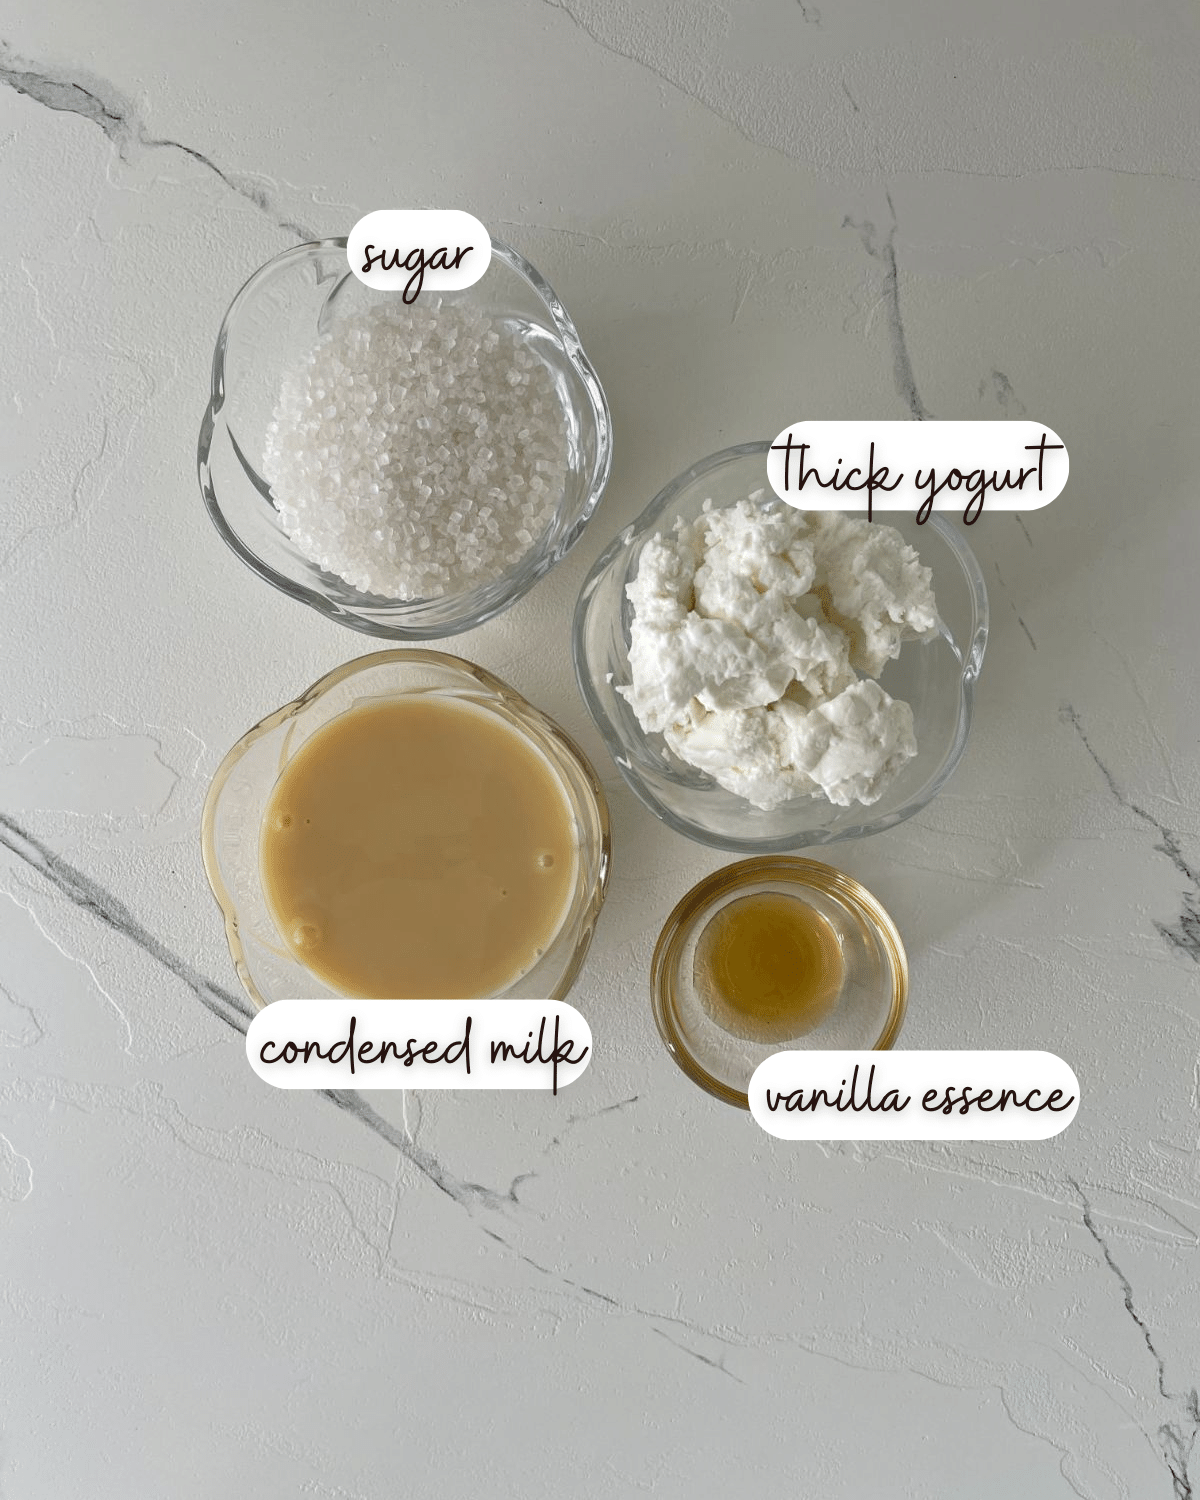 Ingredients of Baked Yogurt with Caramel Shards